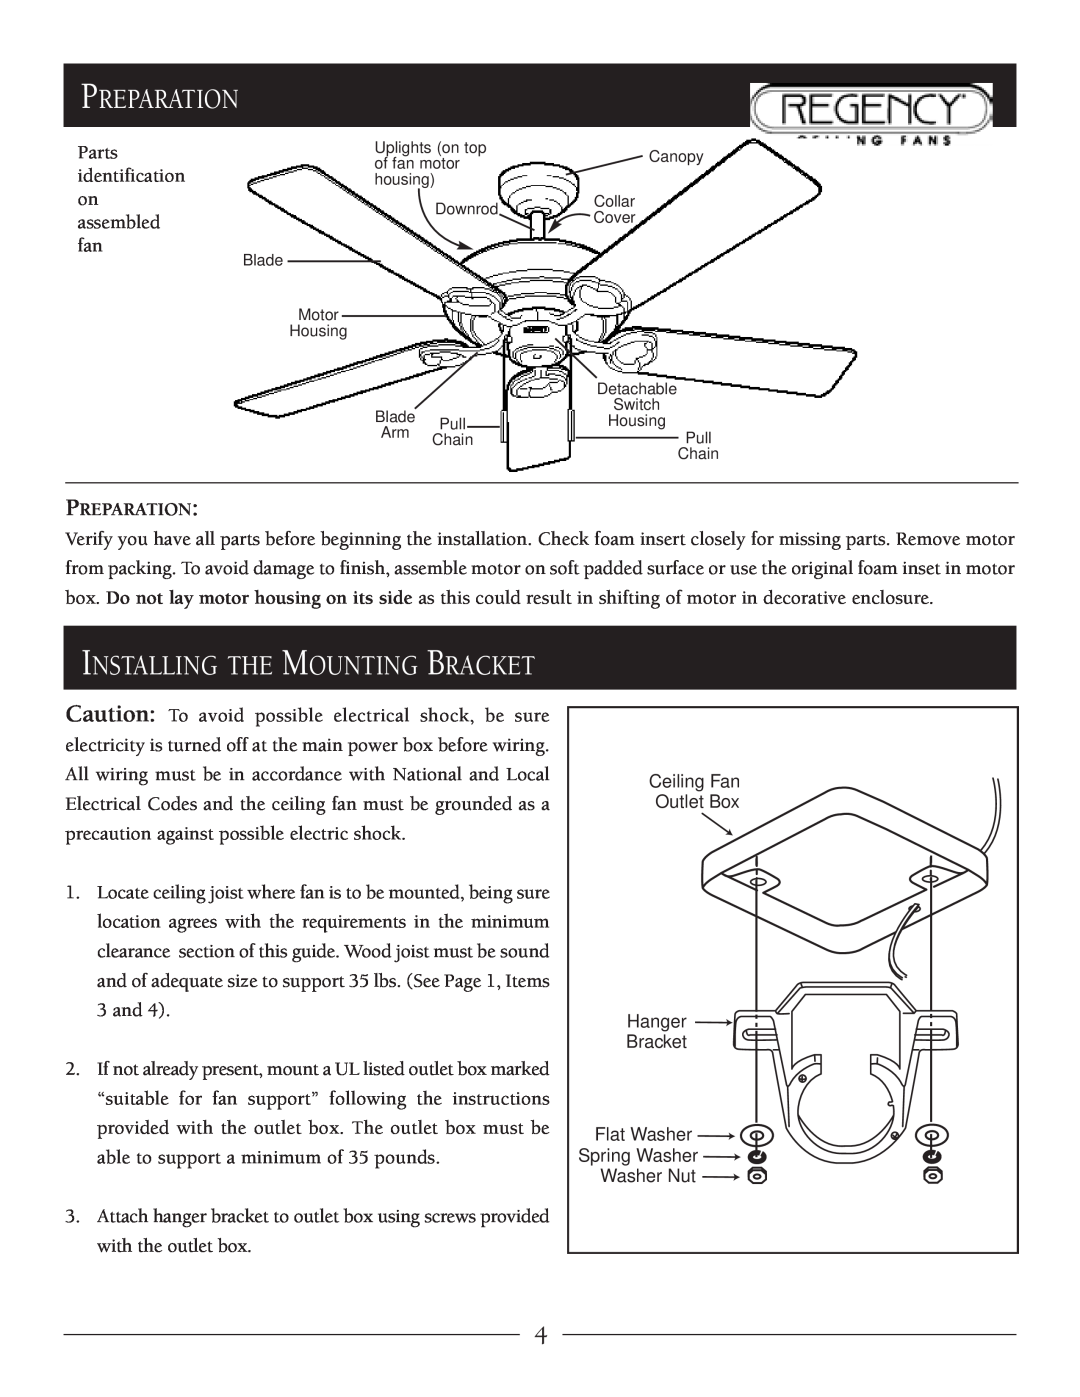 Regency Wraps LX owner manual Preparation, Installing The Mounting Bracket 